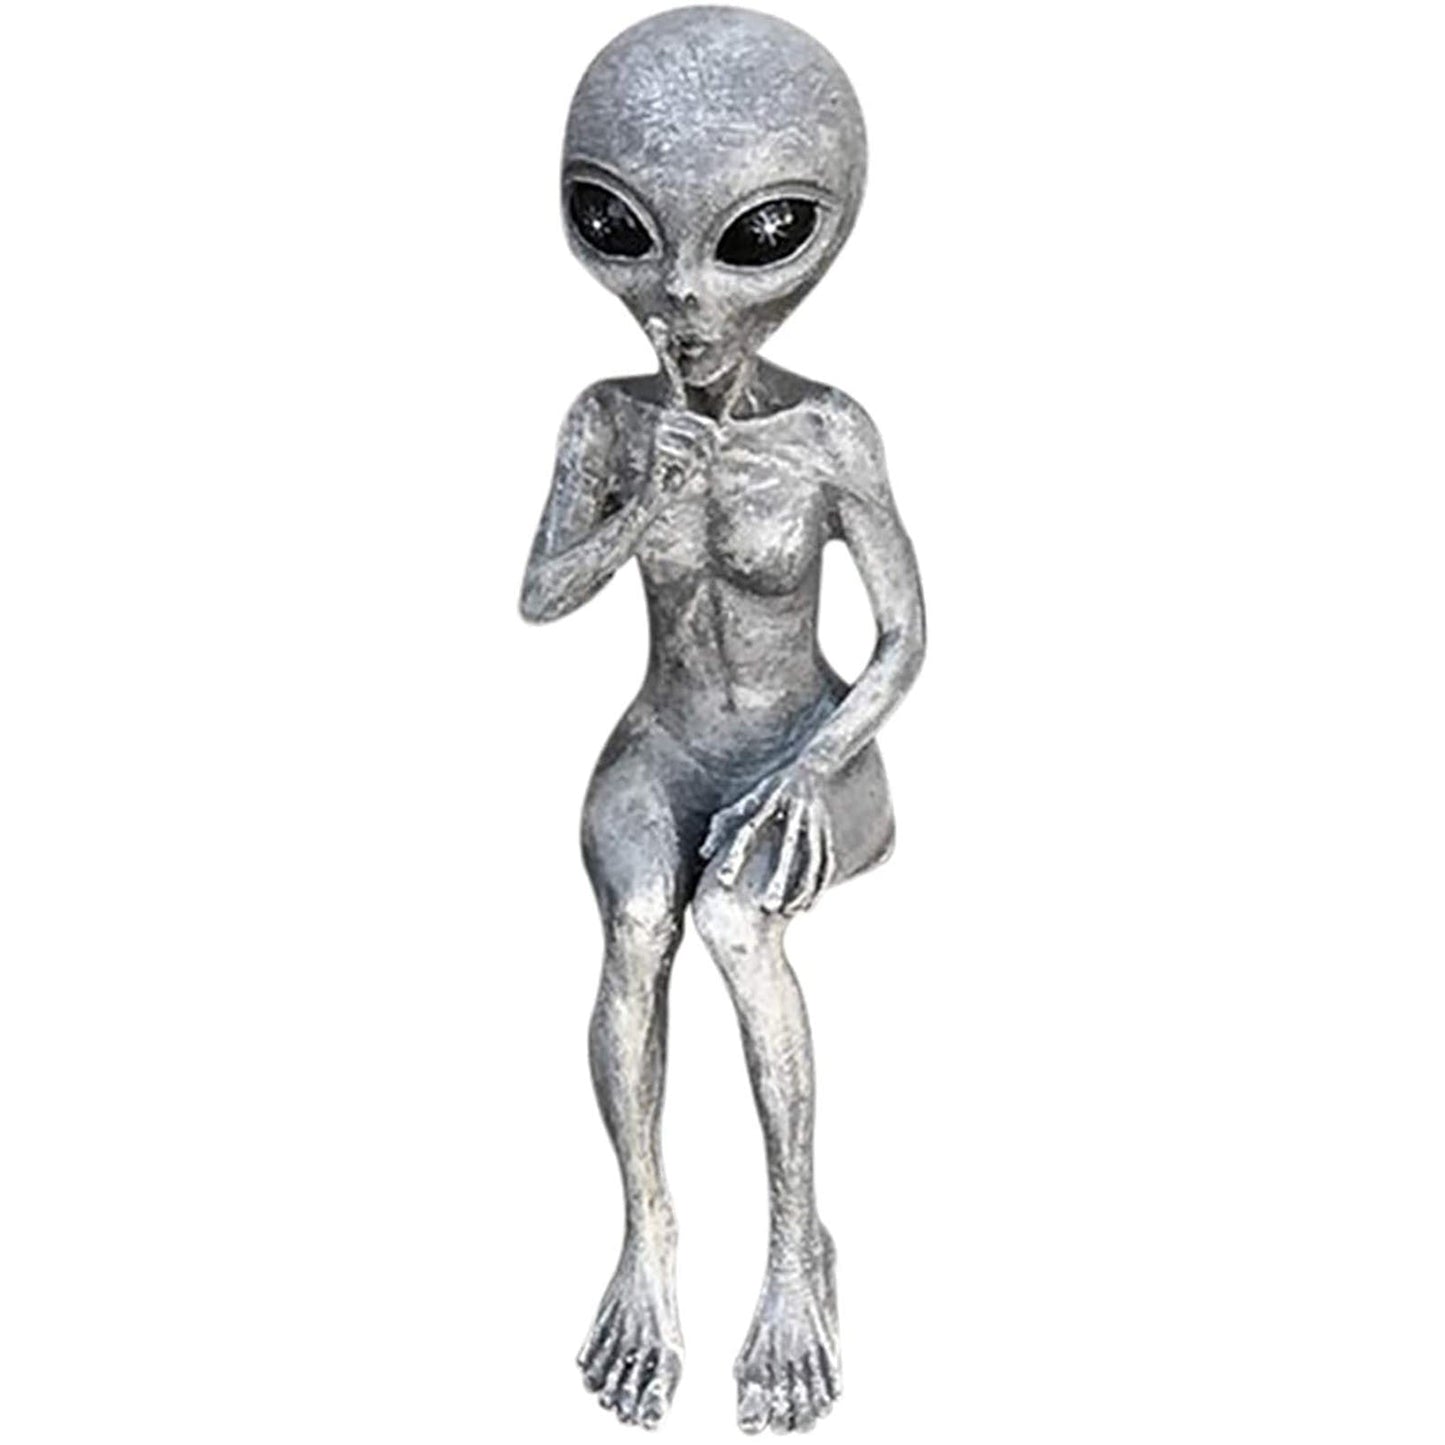 Neue Weltraum Alien Zubehör Statue Marsianer Garten Figuren Set Für Haus Indoor Outdoor Dekoration Hof Ornamente 